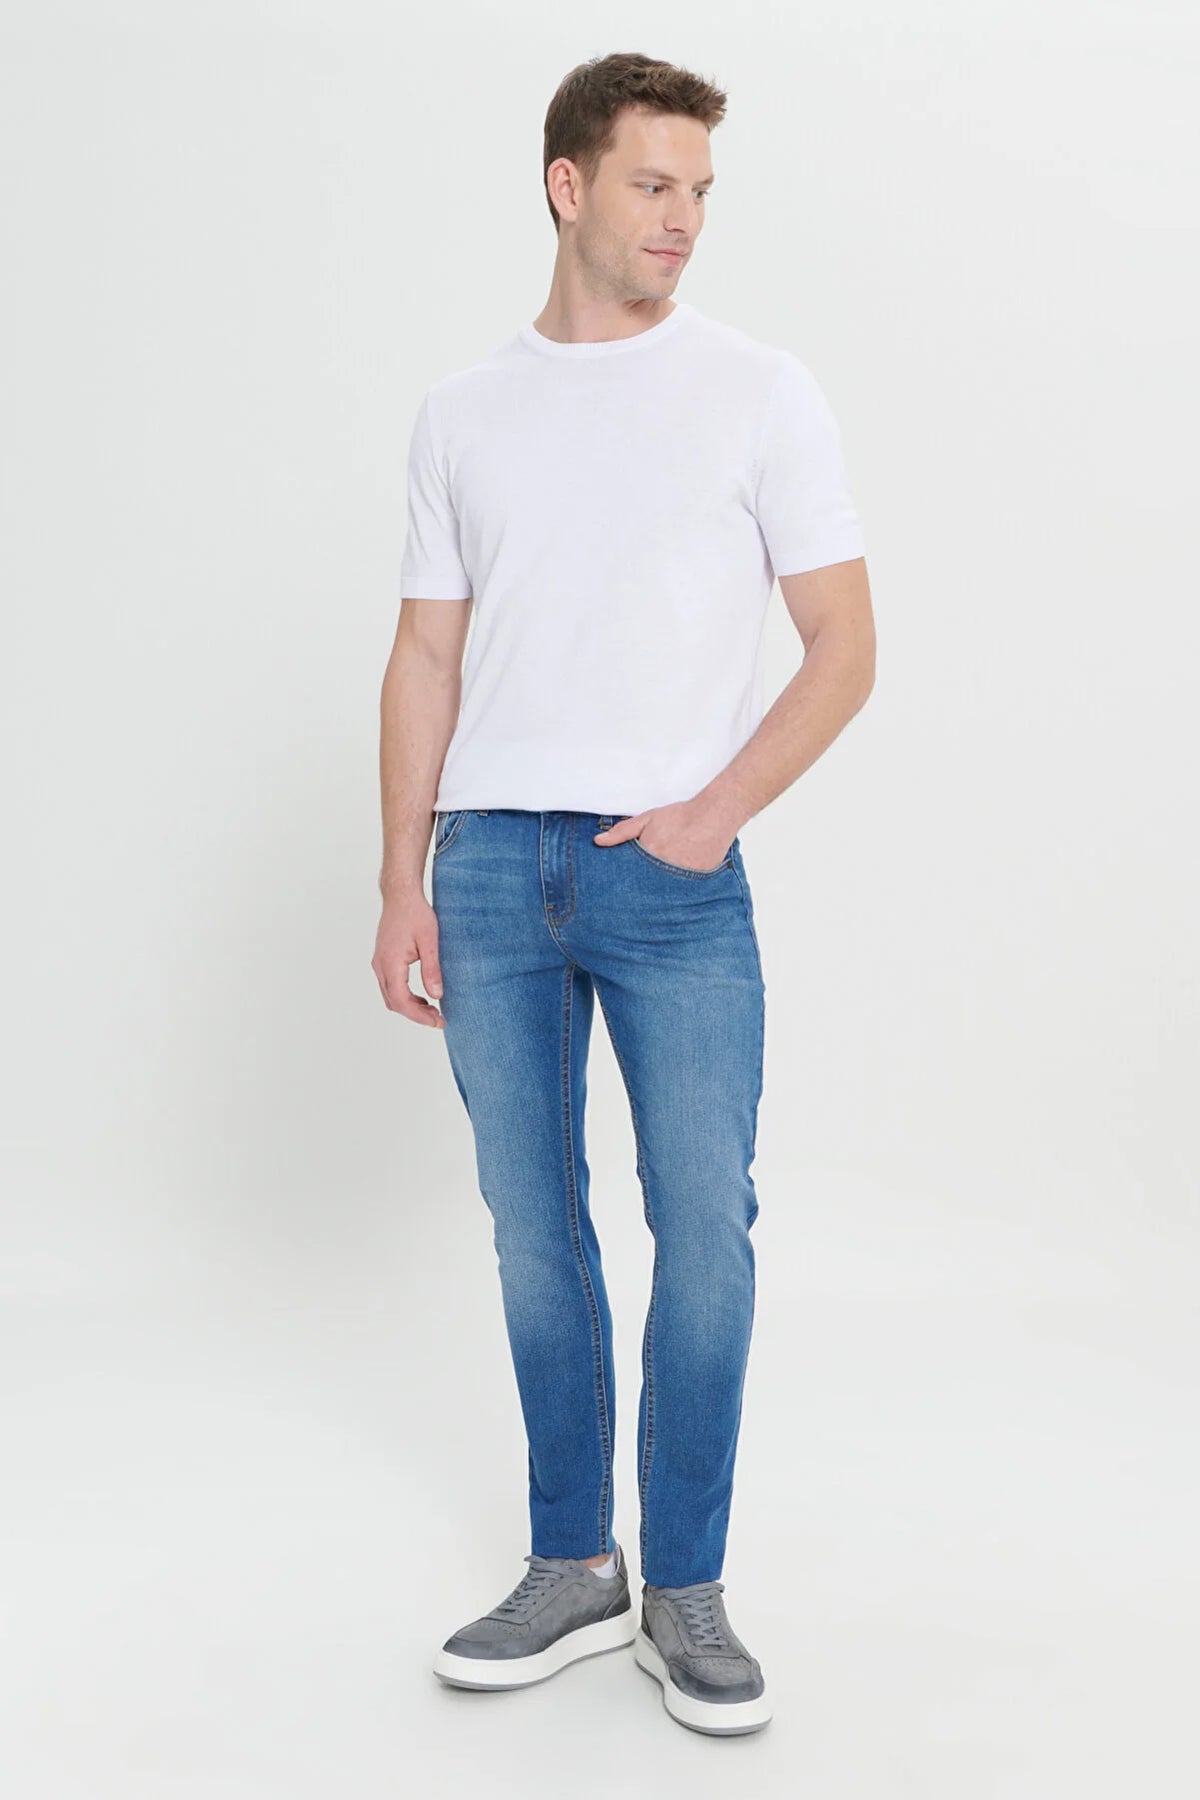 AC&CO Men's Extra Slim Fit Jeans Denim Trousers